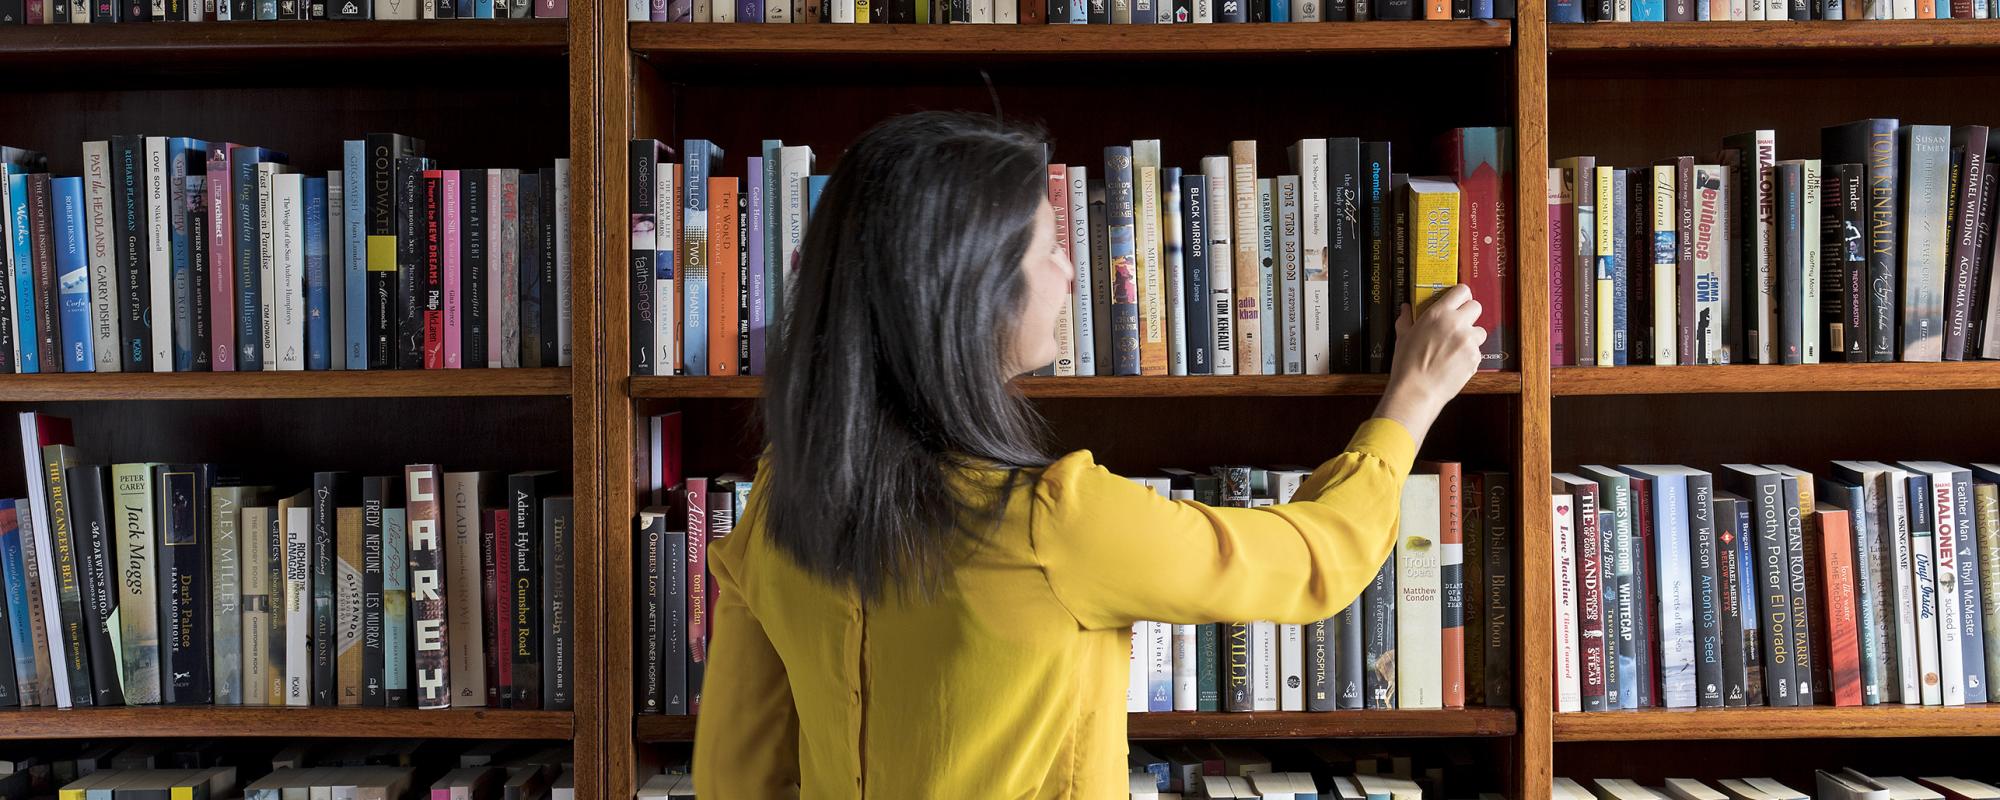 Women pulling books off shelf